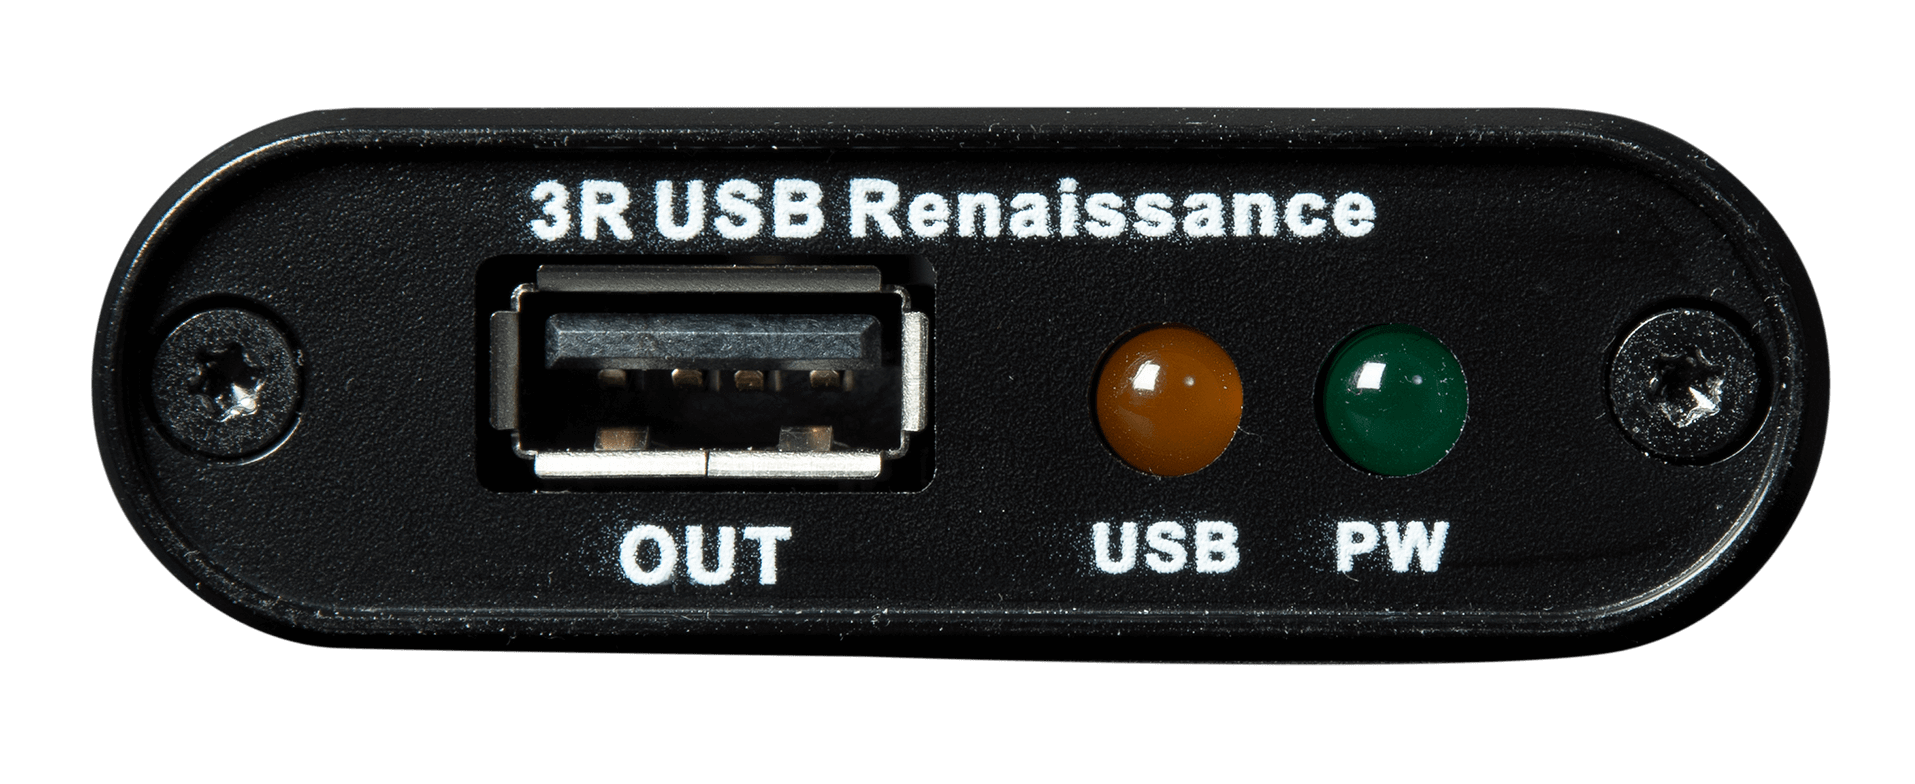 3R USB Renaissance mk2